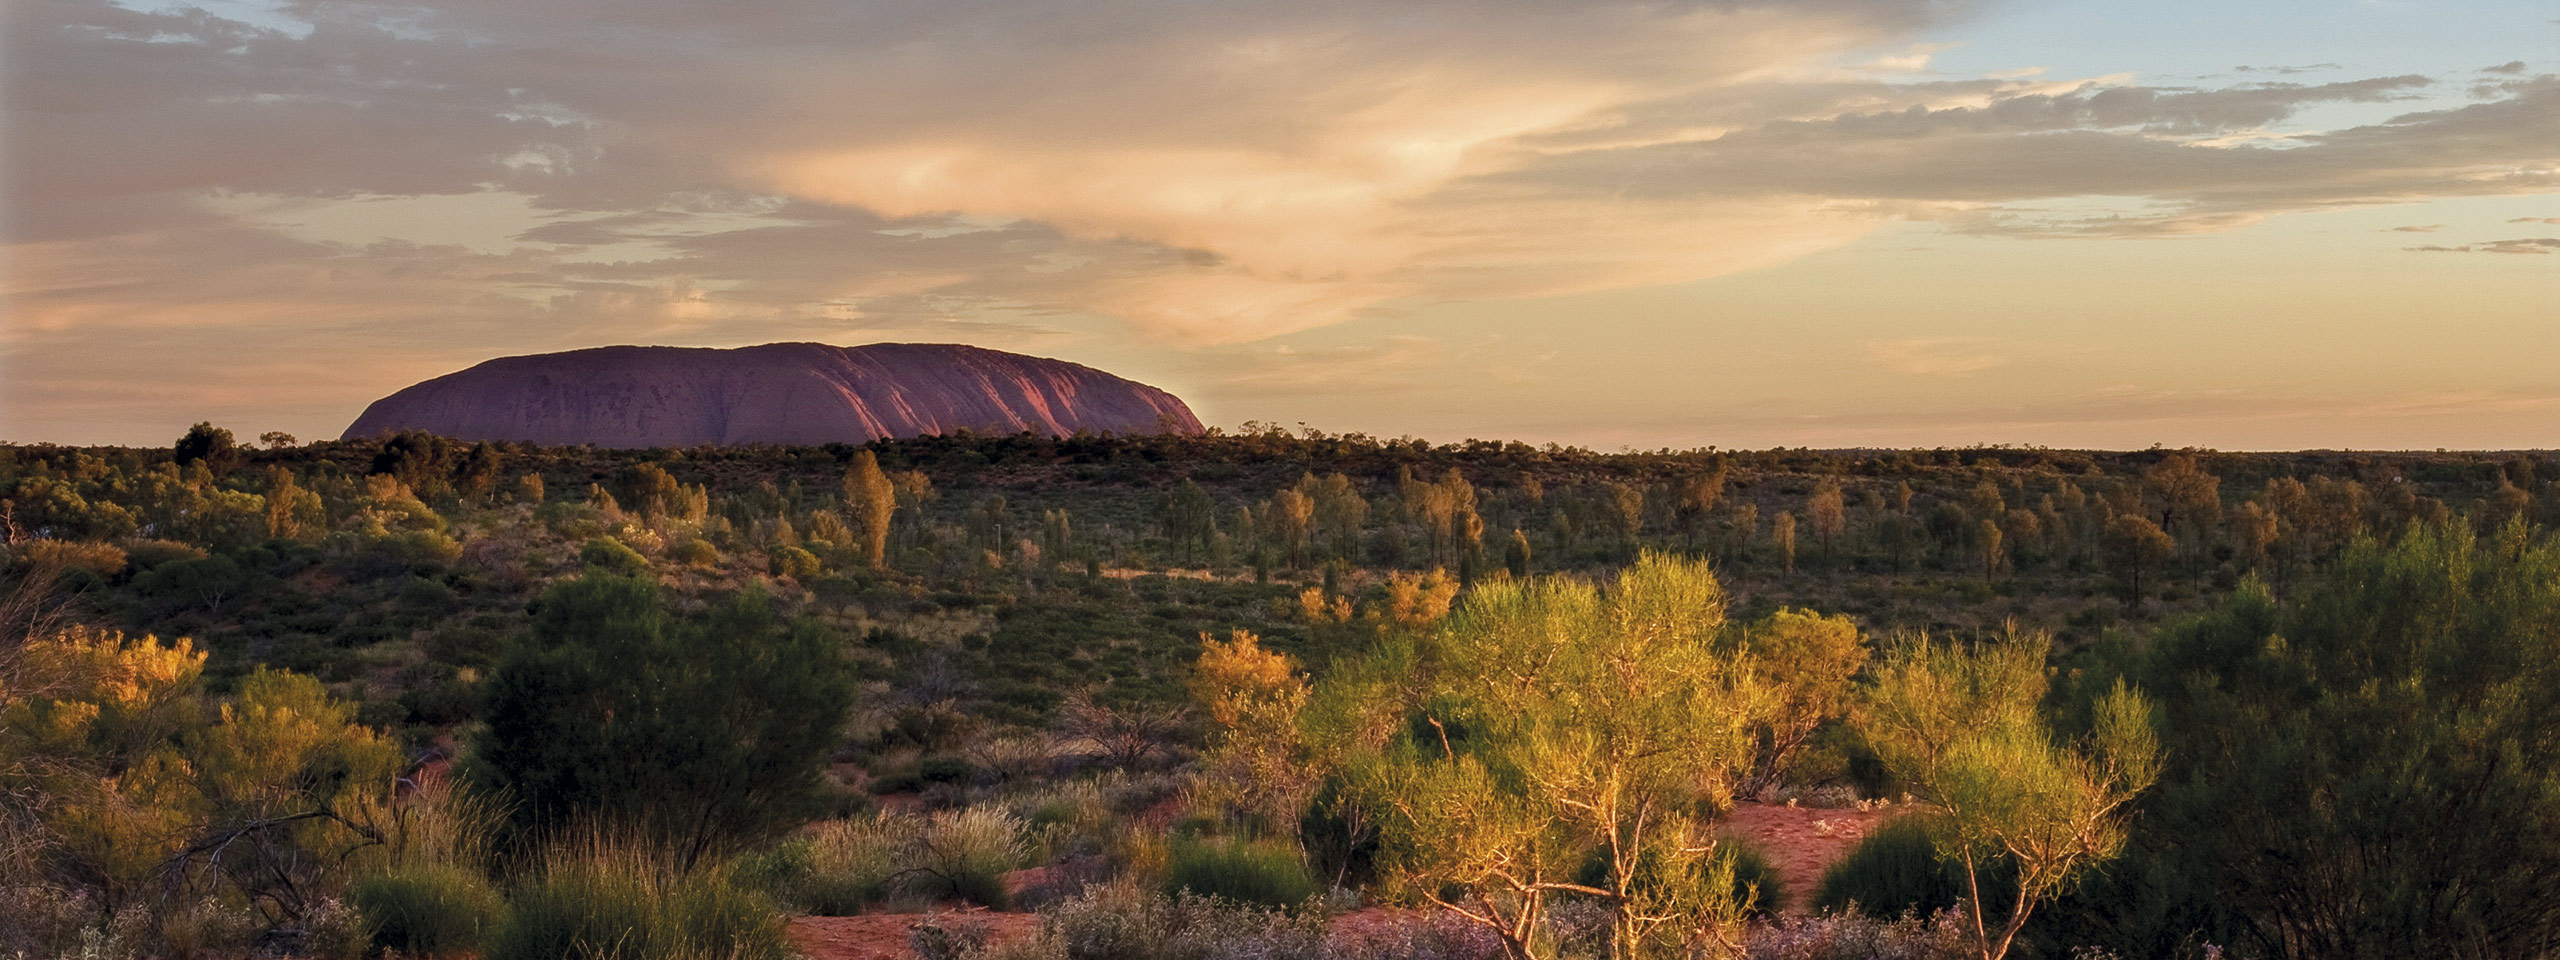 Uluru, Uluru-Kata Tjuta National Park, Northern Territory